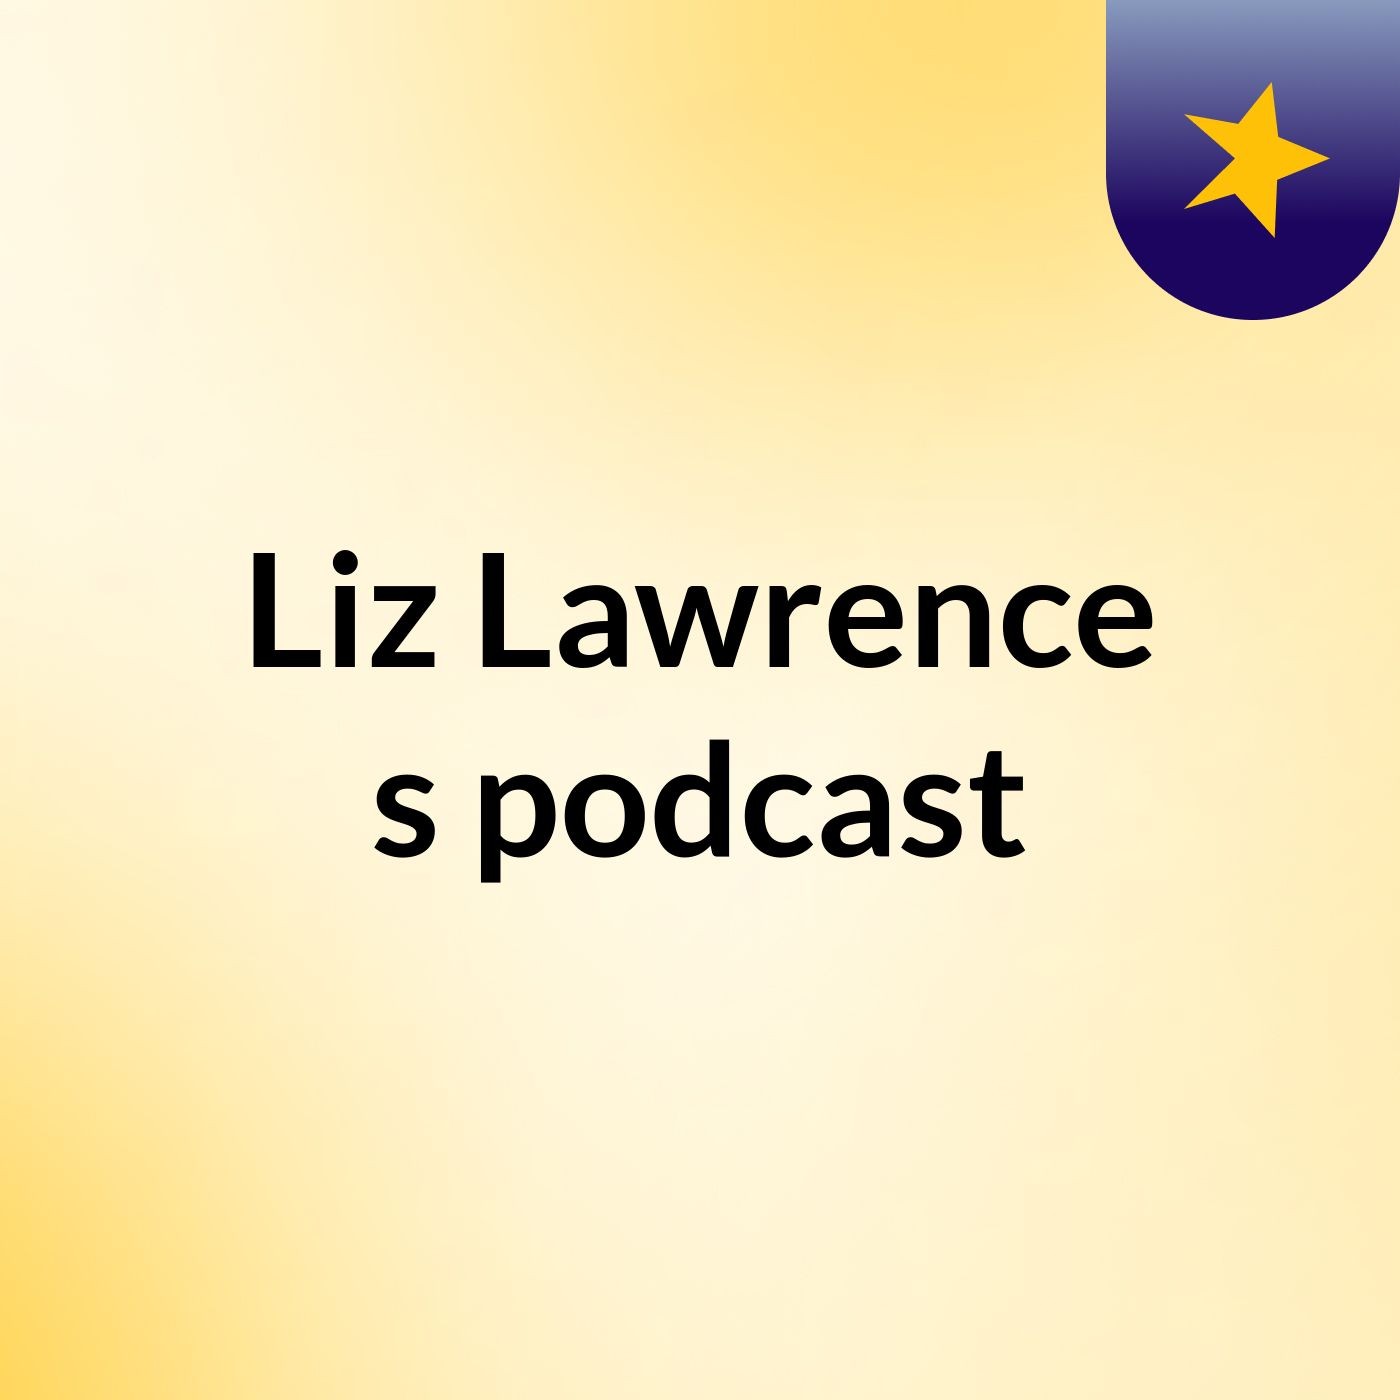 Liz Lawrence's podcast